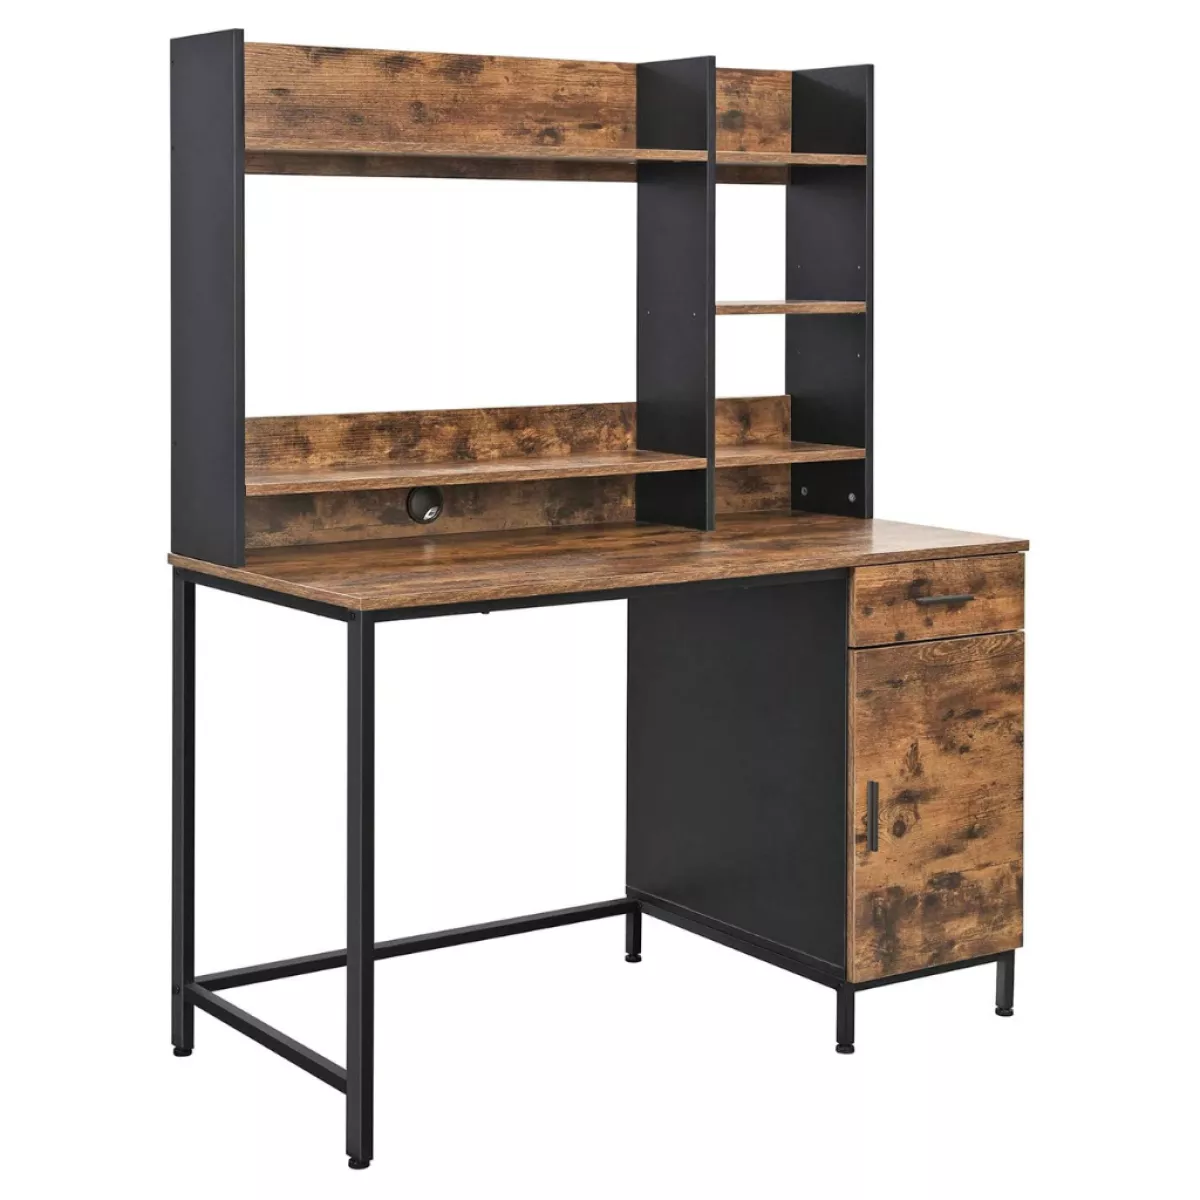 #1 - Skrivebord med reol i industrielt look, rustik brun og sort